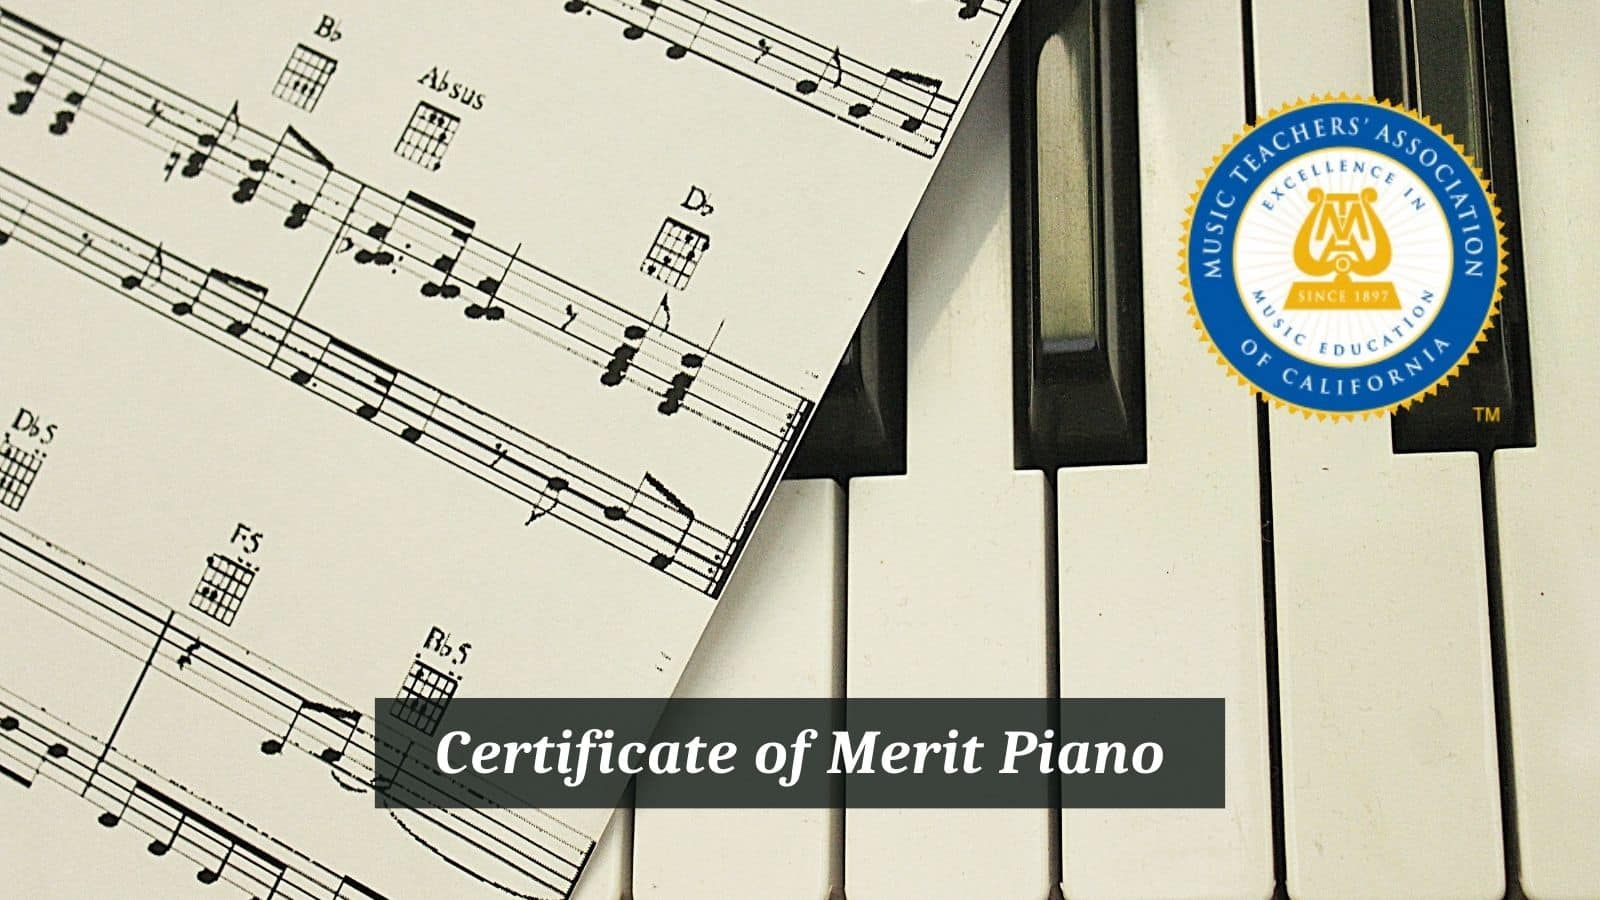 Certificate of Merit Piano